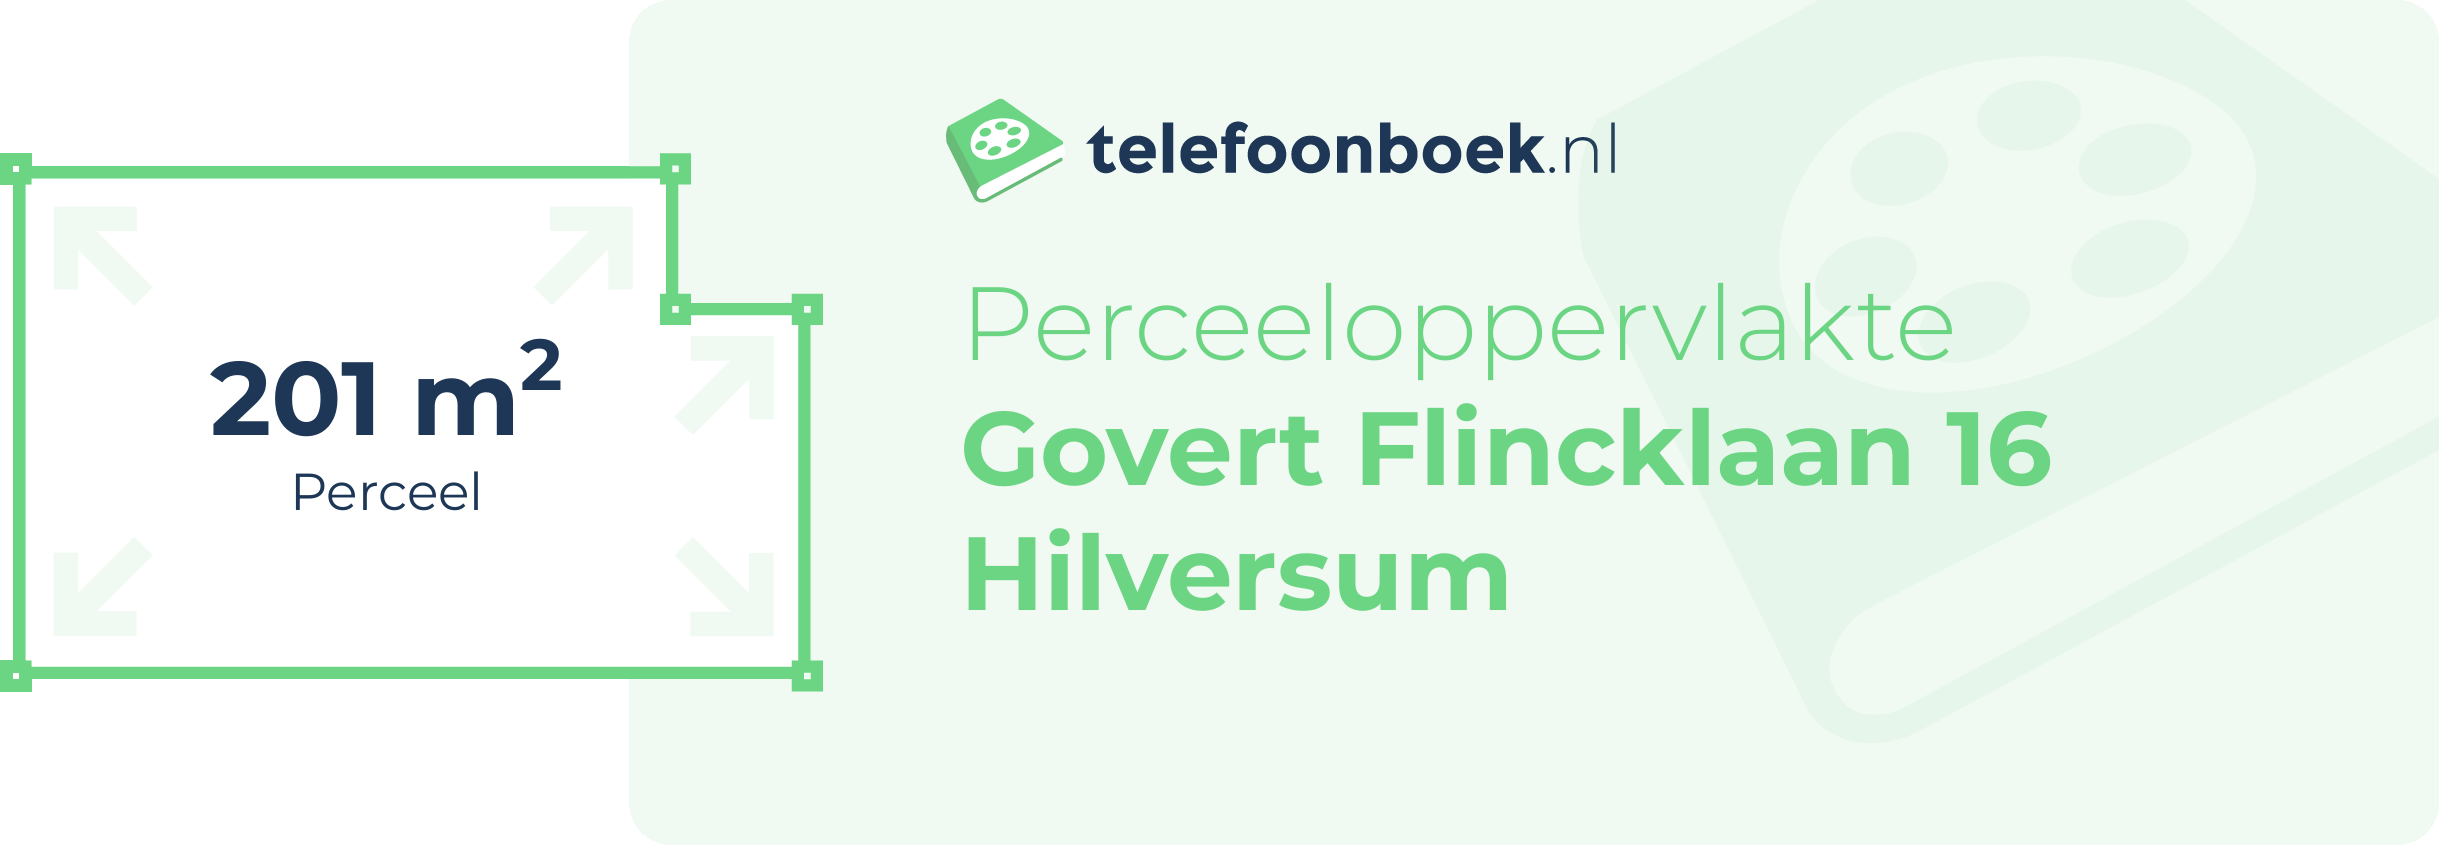 Perceeloppervlakte Govert Flincklaan 16 Hilversum